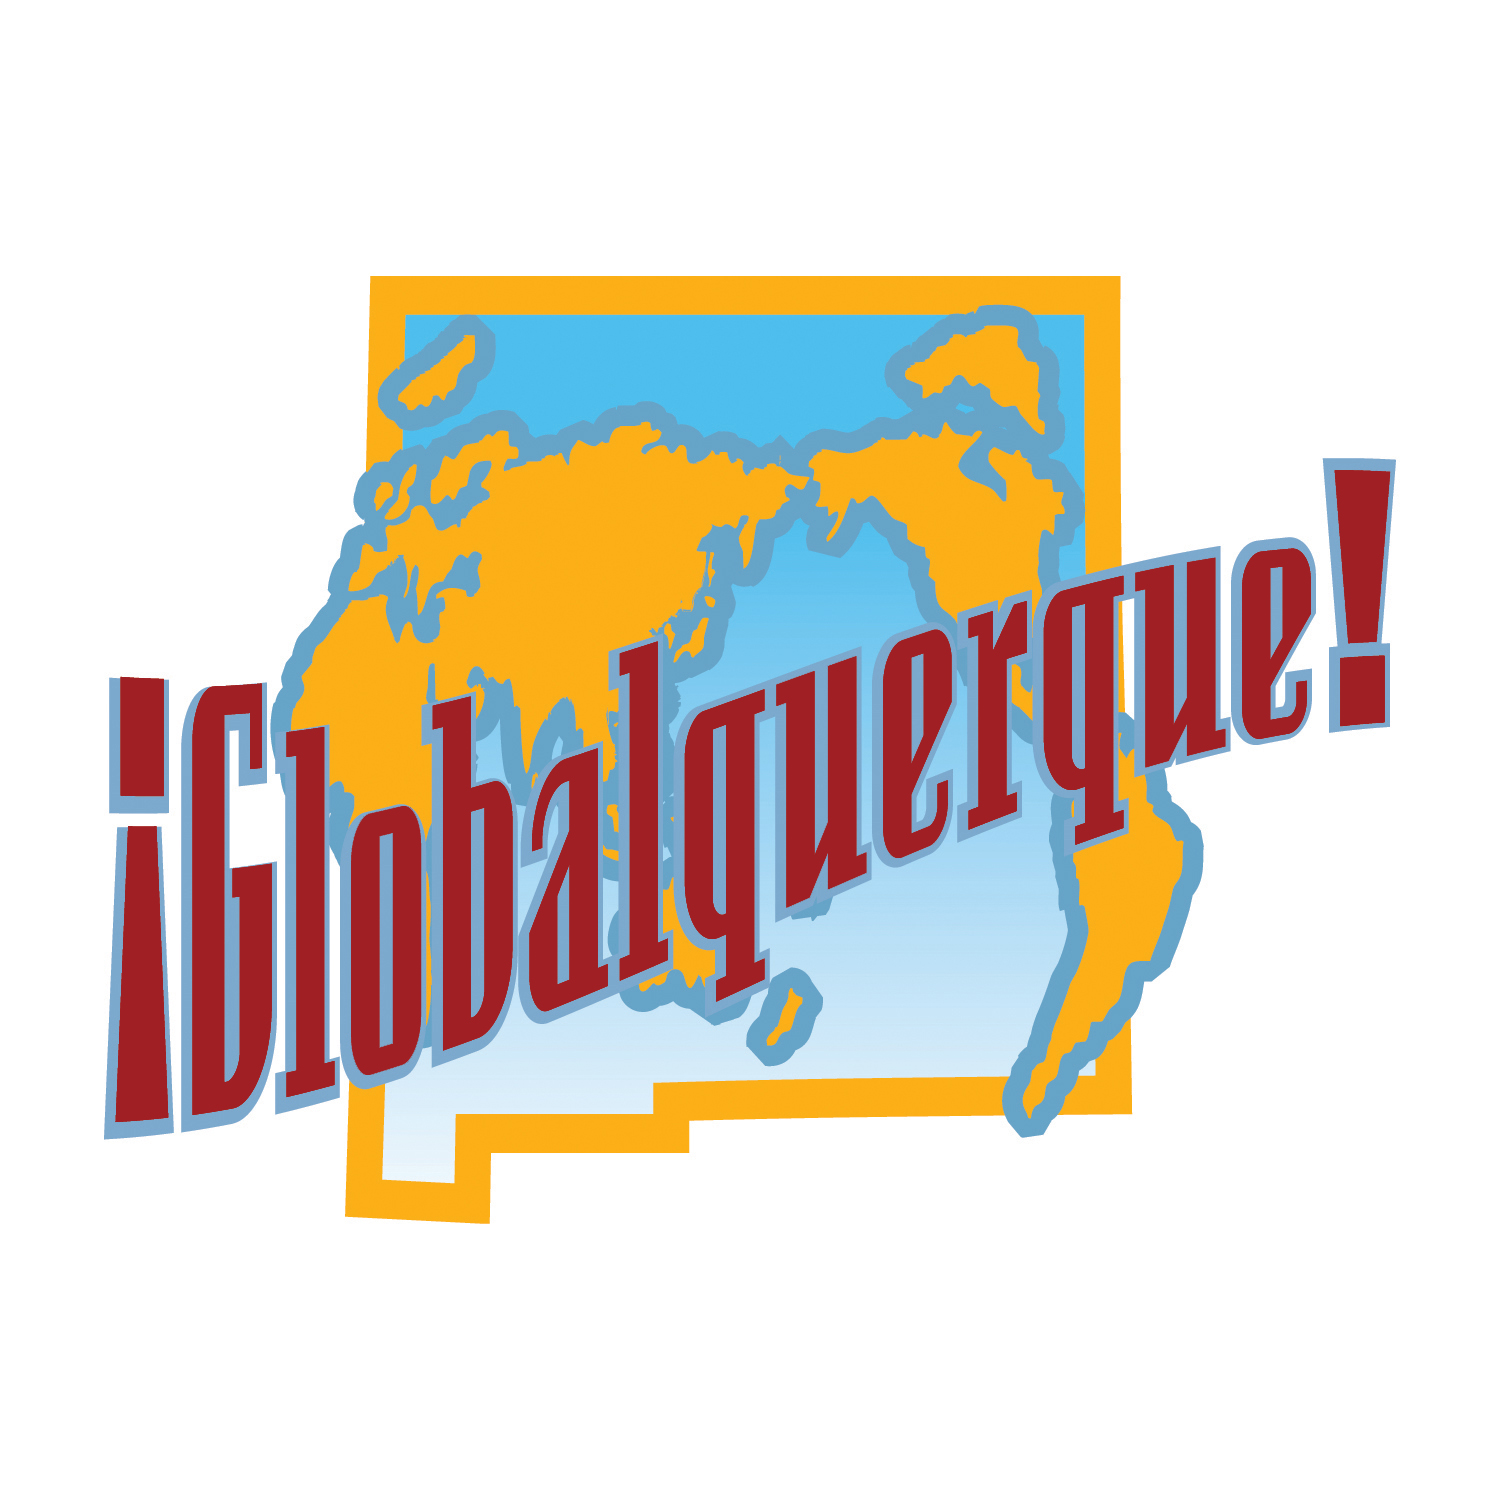 globalquerque-logo_updated_300.jpg